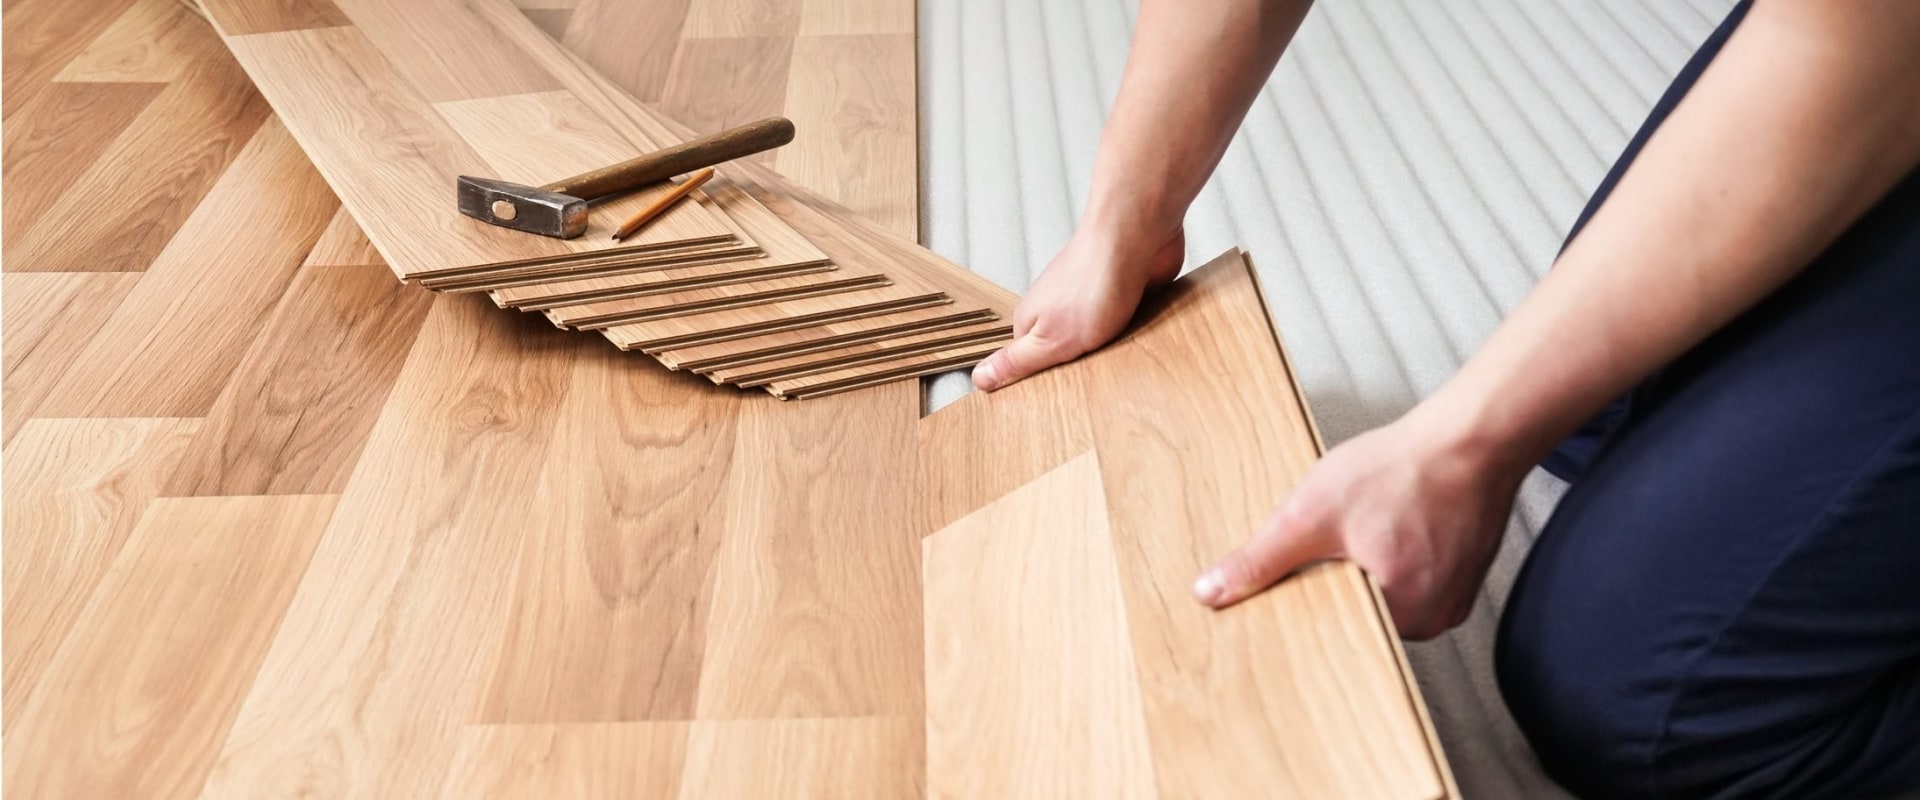 Which Flooring Material Lasts Longer: Hardwood or Laminate?